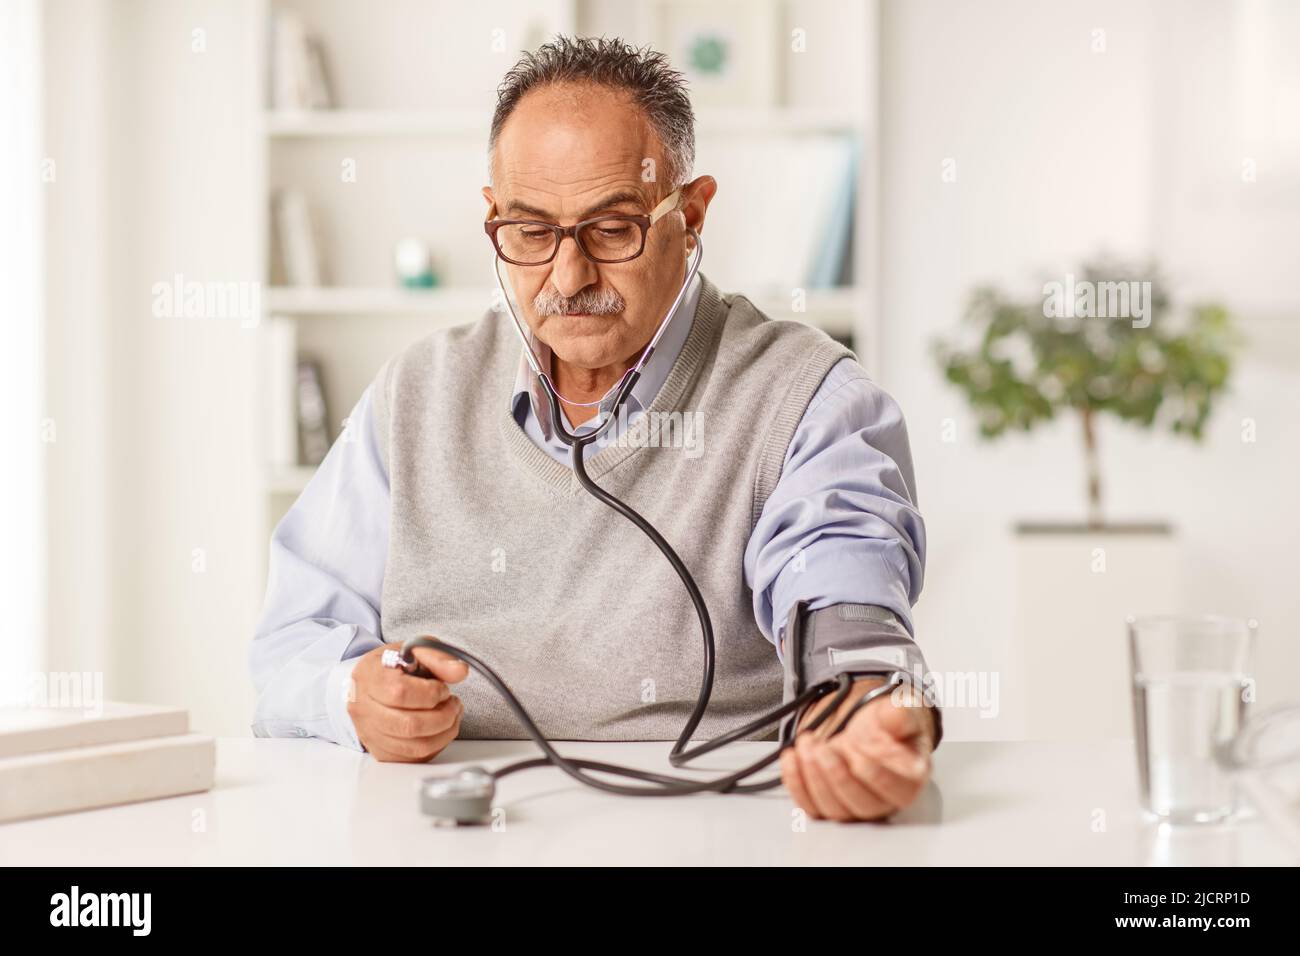 Mature man measuring blood pressure at home Stock Photo